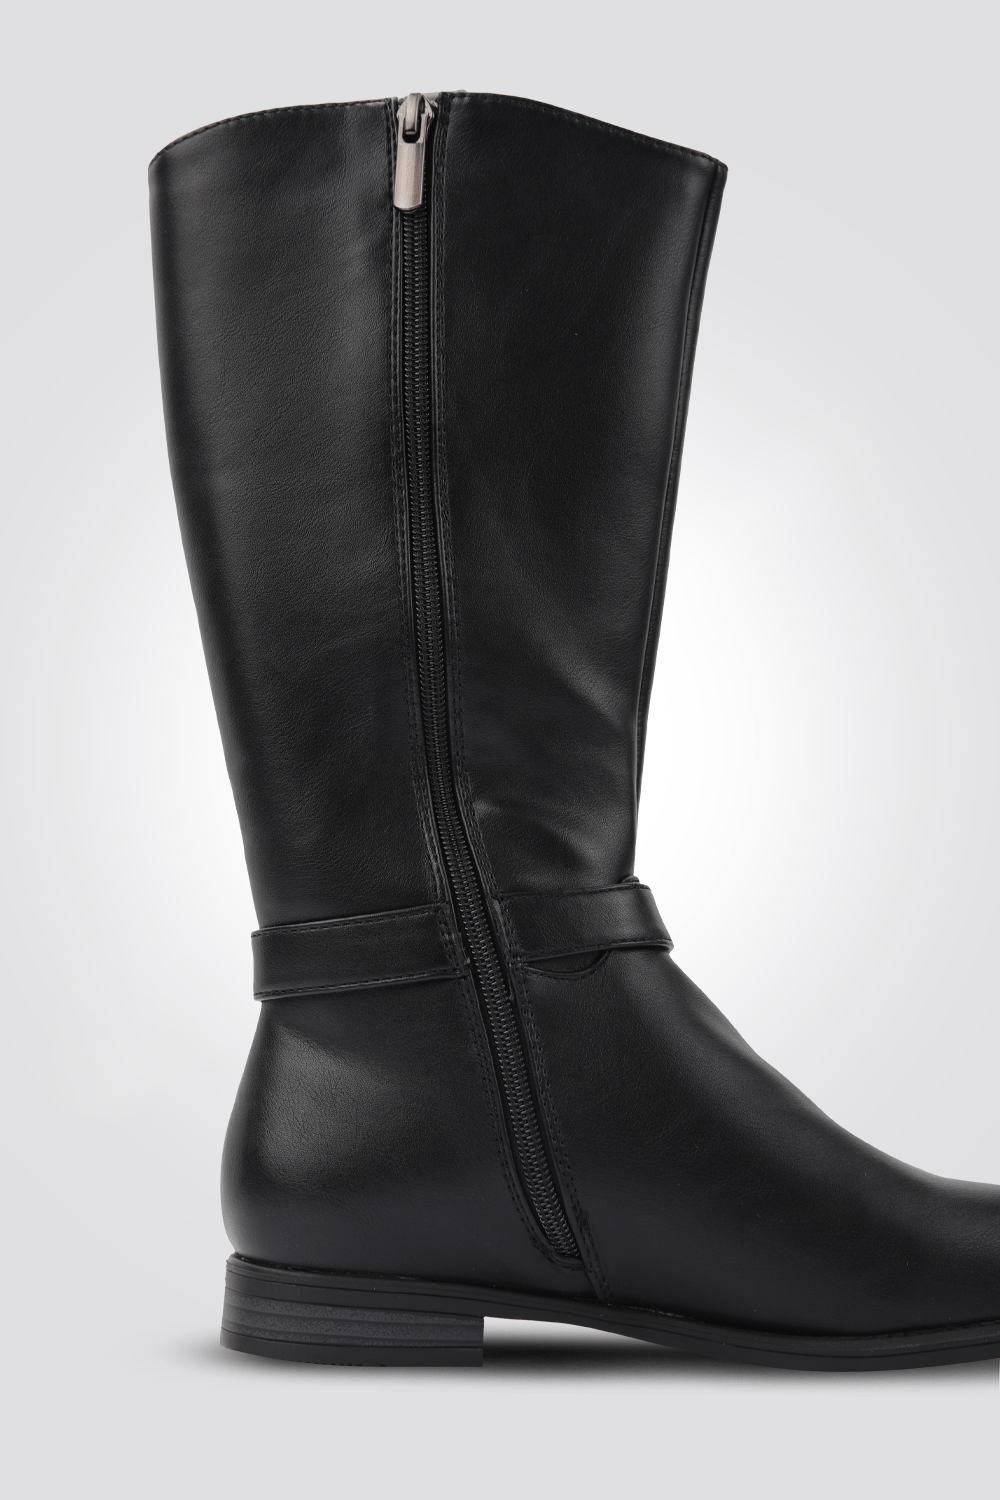 LADY COMFORT - מגפיים לנשים עם רצועה עליונה בצבע שחור - MASHBIR//365